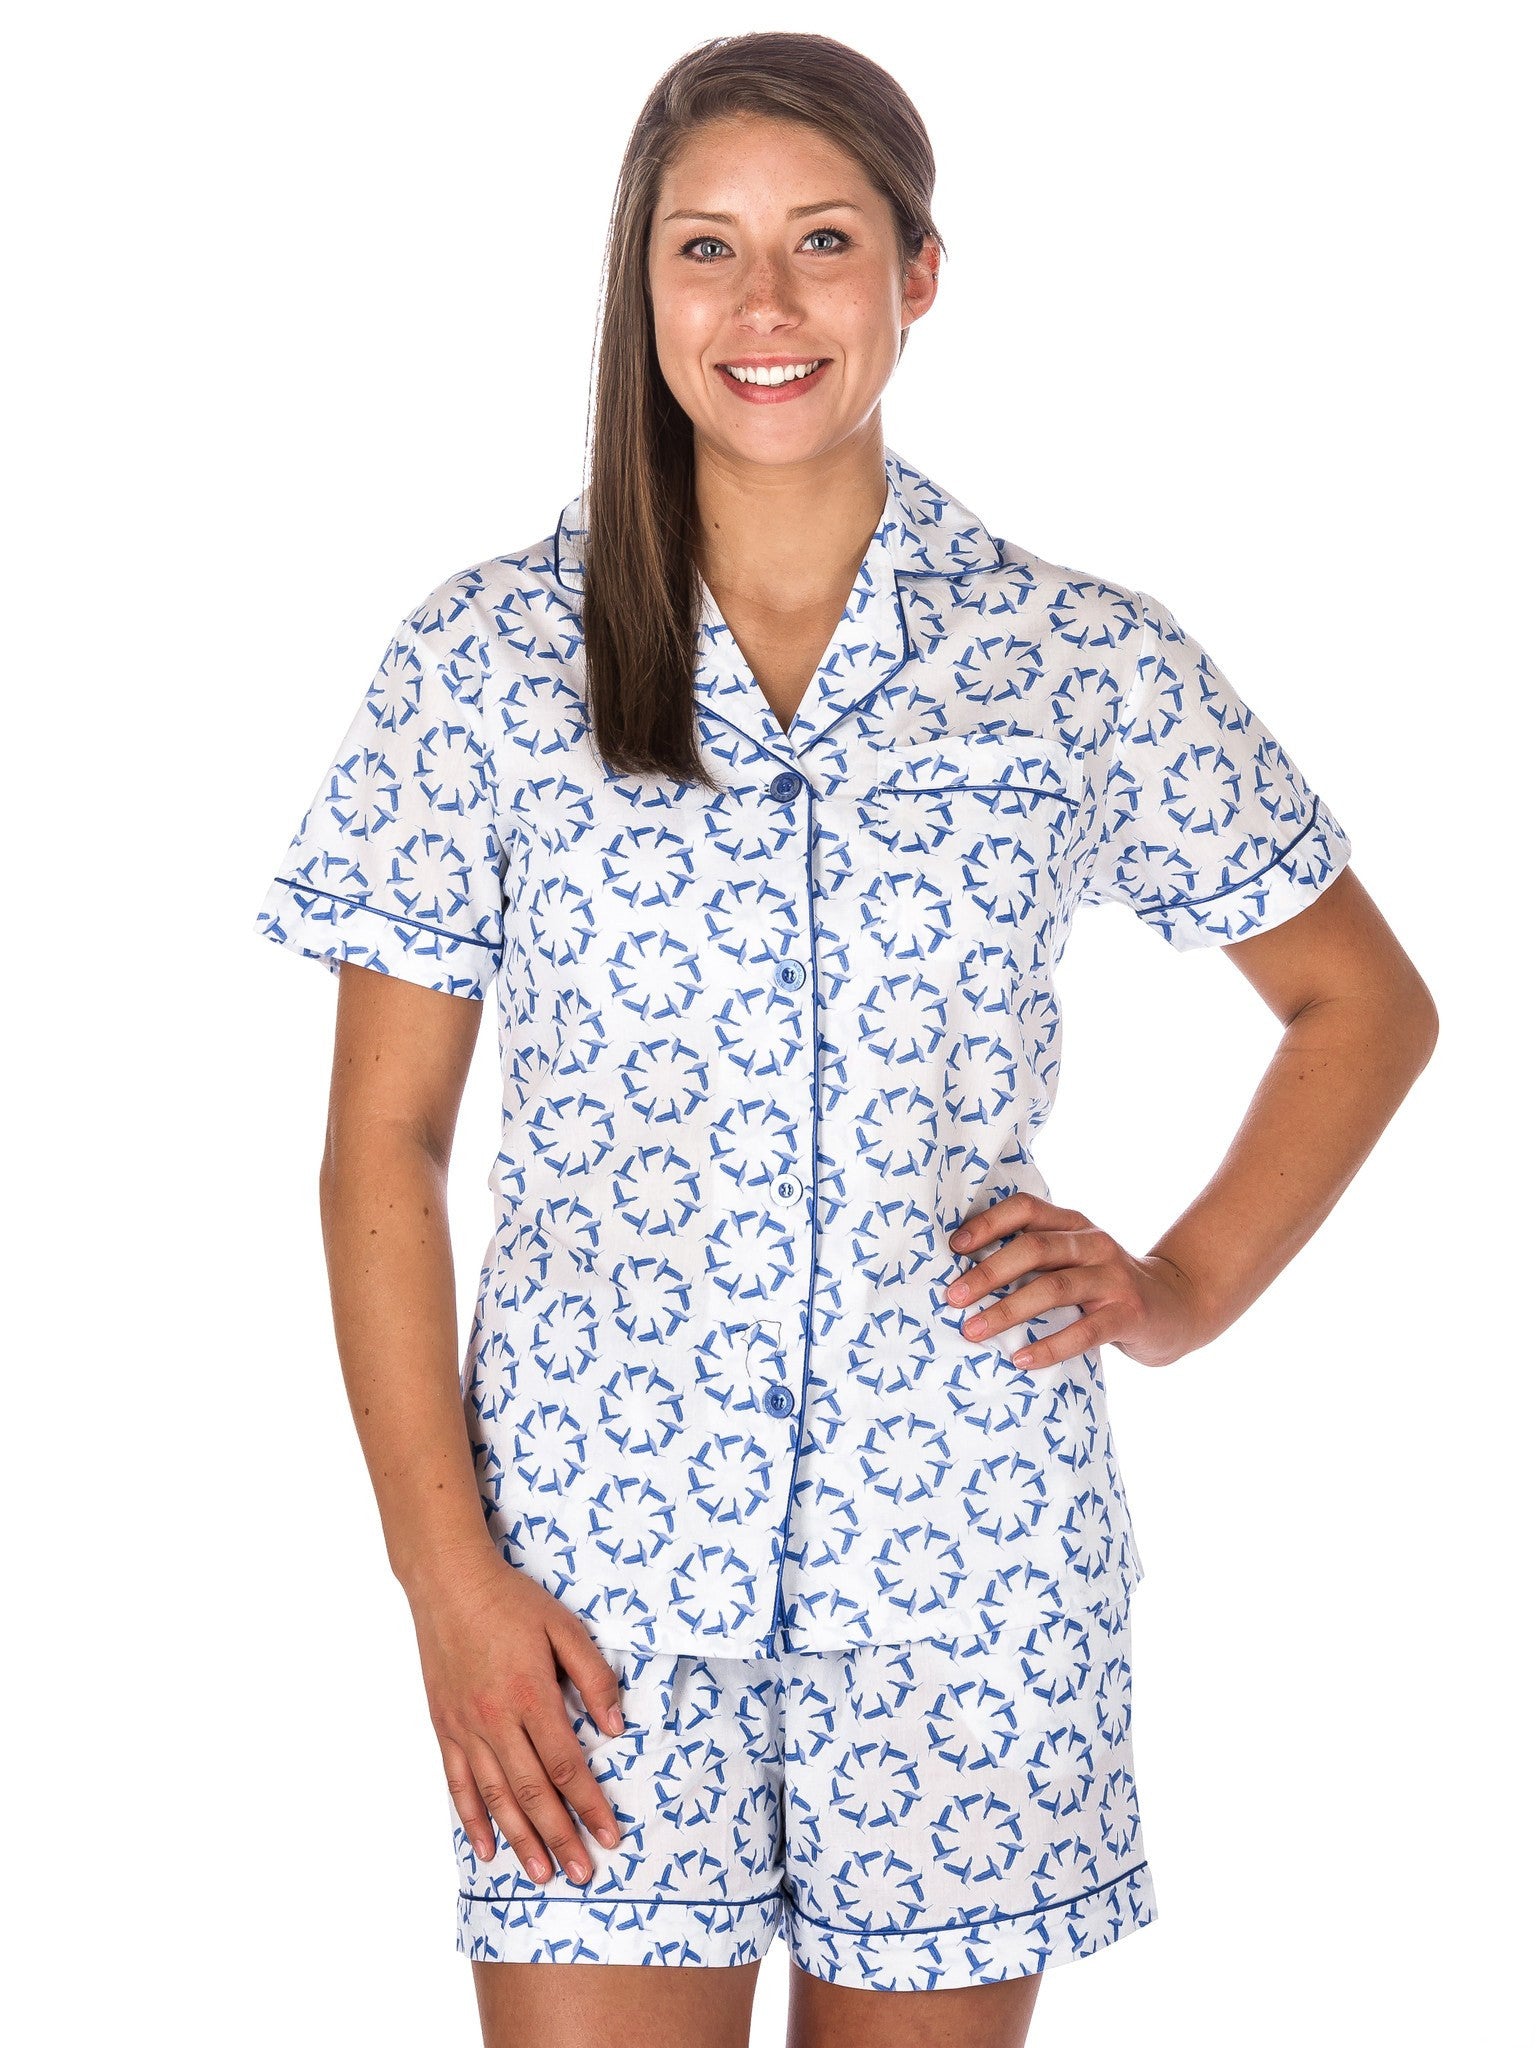 Women's Premium 100% Cotton Poplin Short Pajama Set